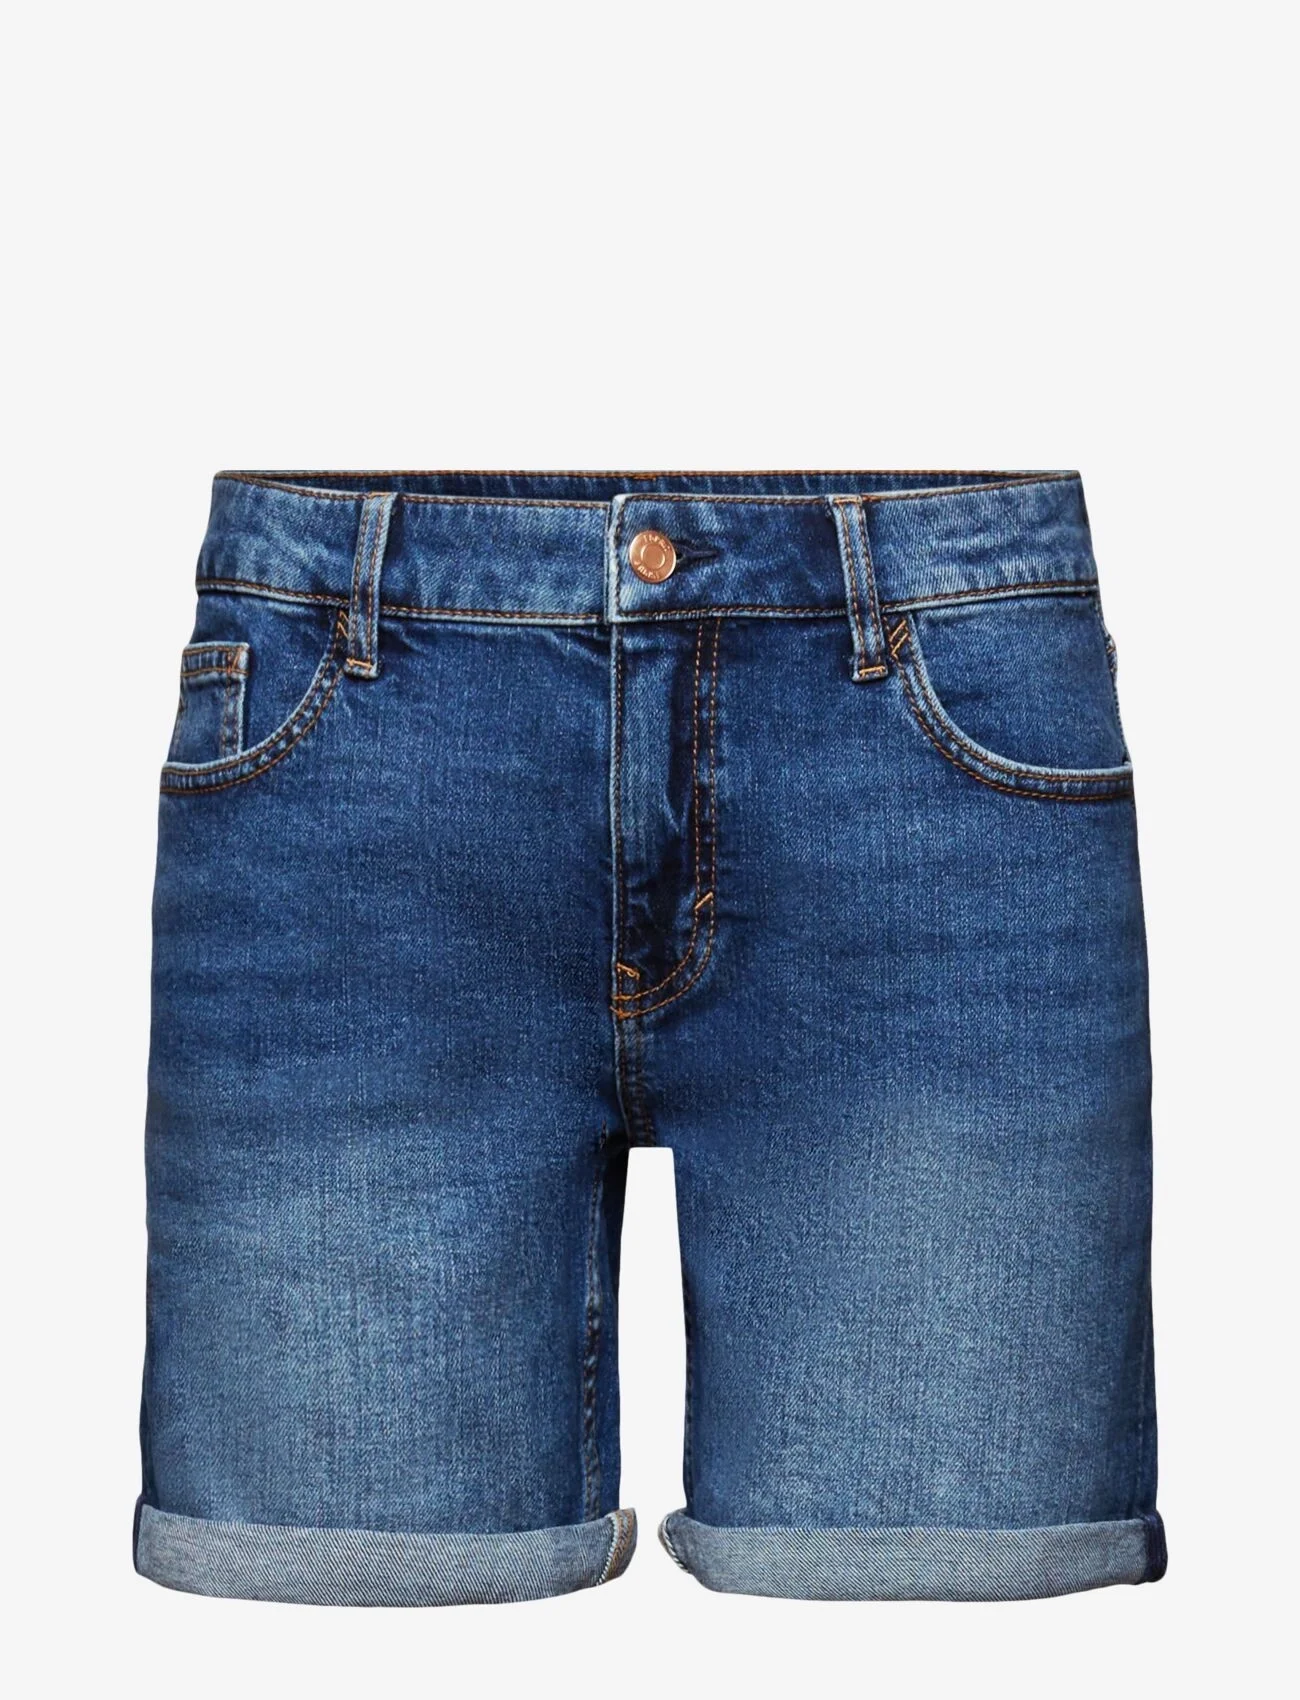 Esprit Casual - Shorts denim - jeansshorts - blue medium wash - 0